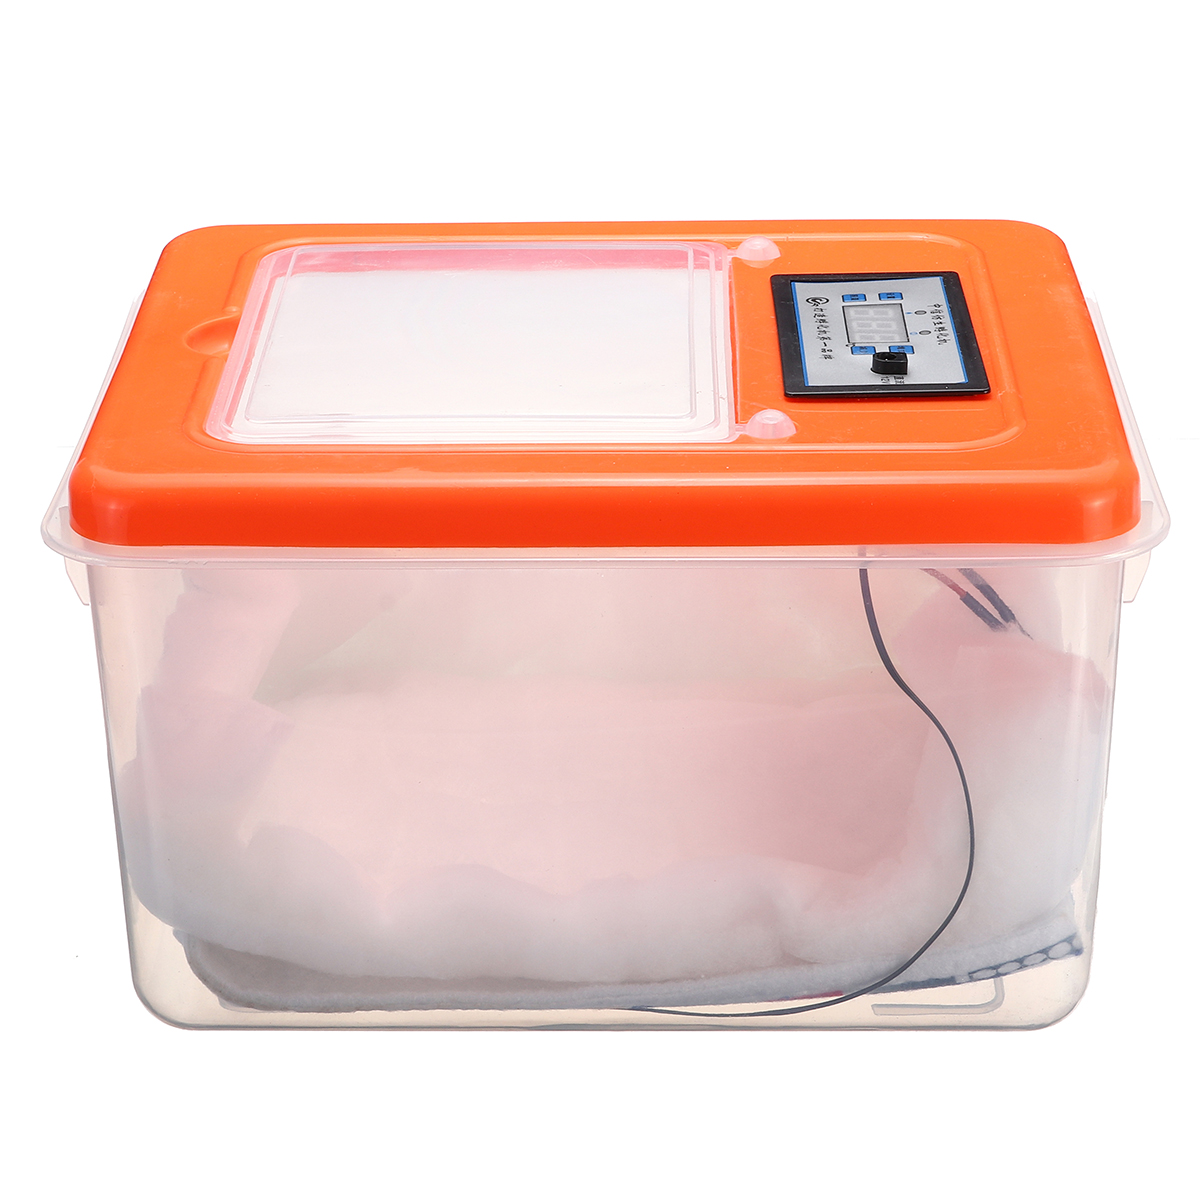 

40pcs Egg Automatic Digital Poultry Incubator Hatcher Water Incubation Temperature Control 12V/220V